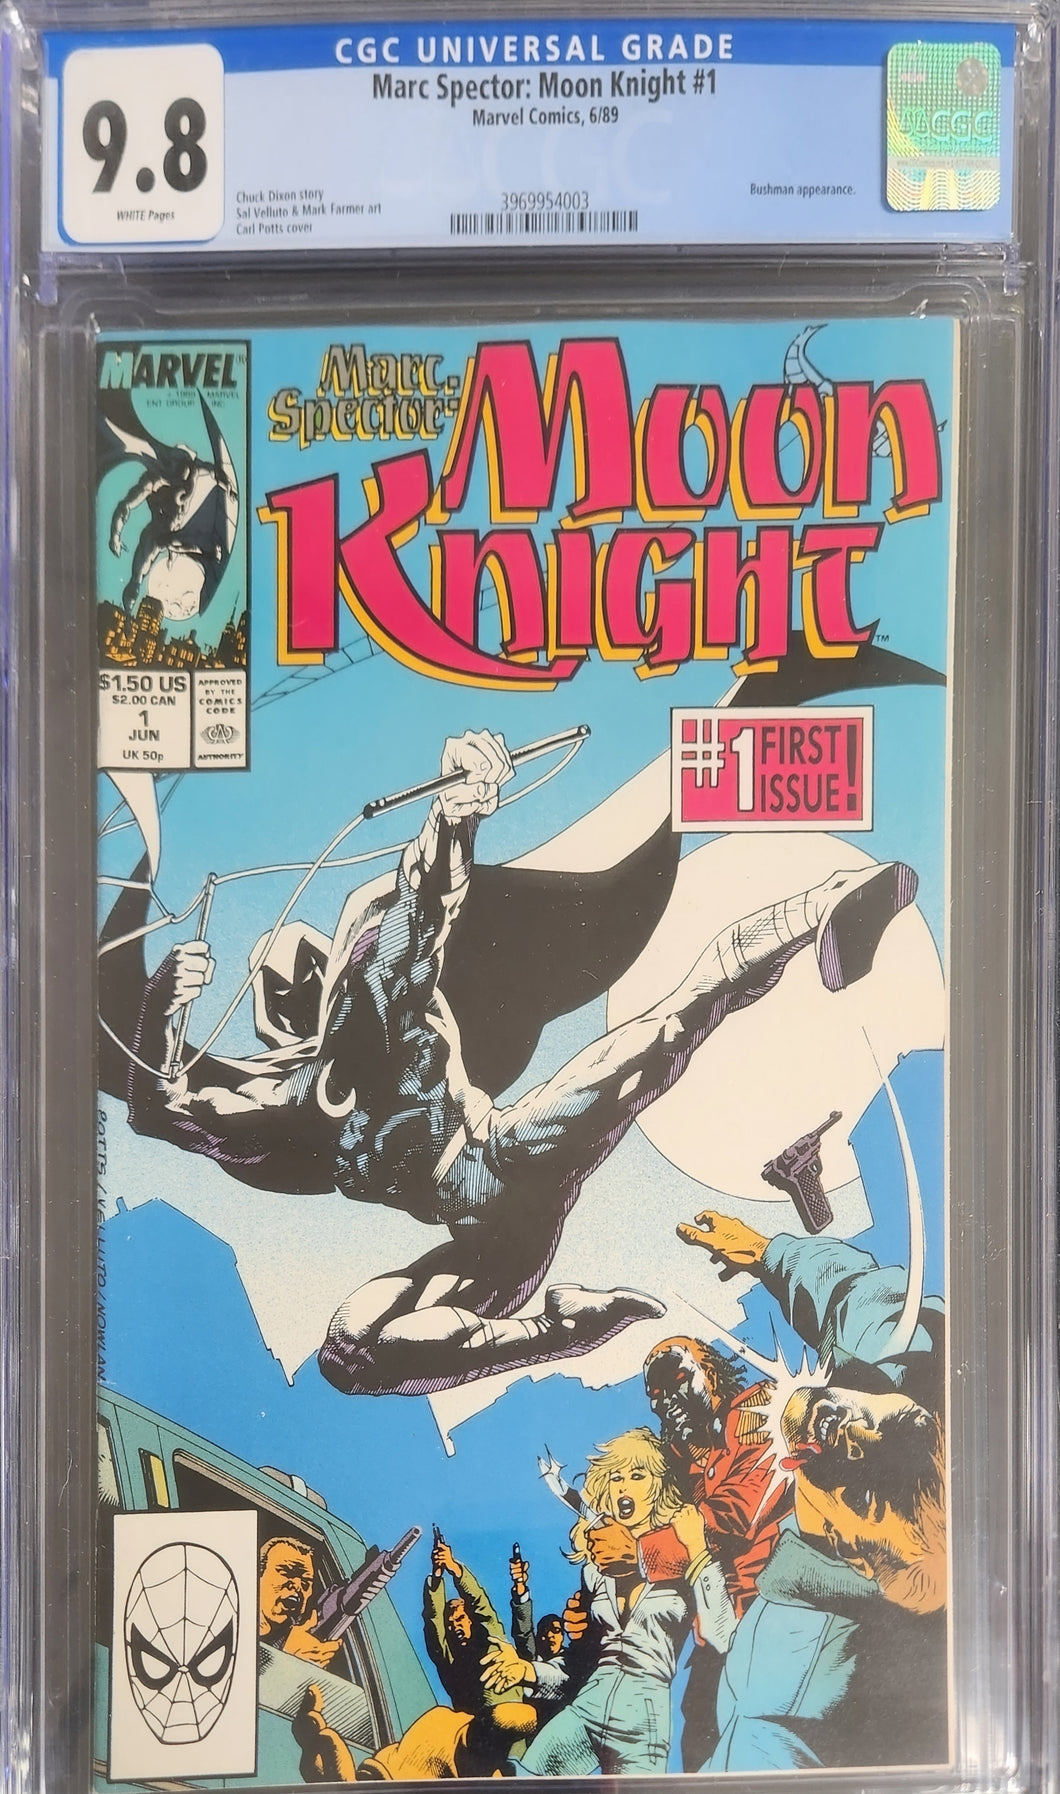 Marc Spector: Moon Knight #1 CGC 9.8 (1989)